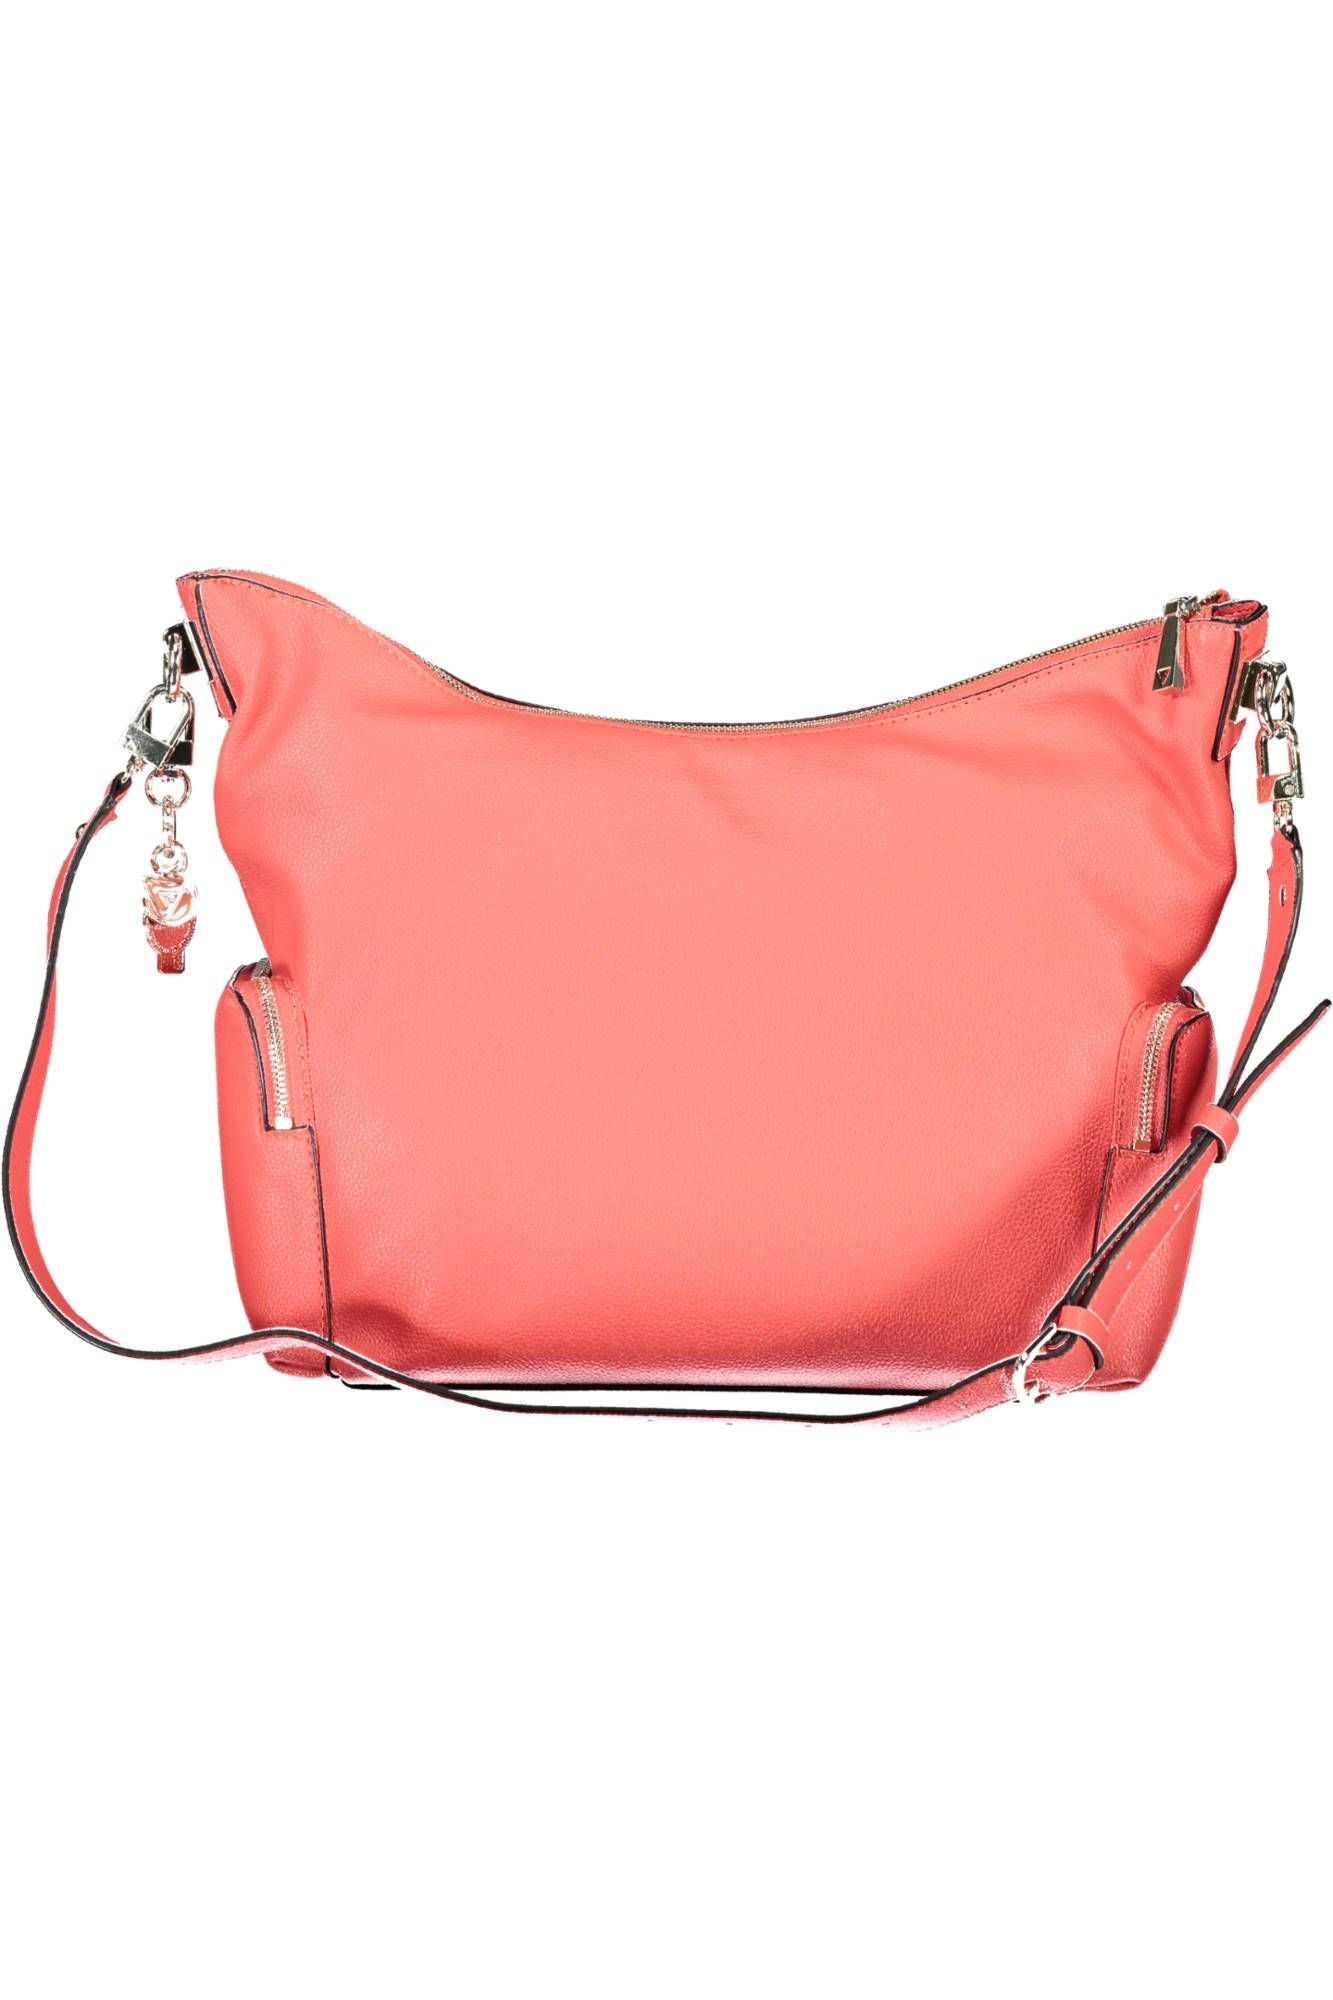 Chic Pink Guess Crossbody Handbag